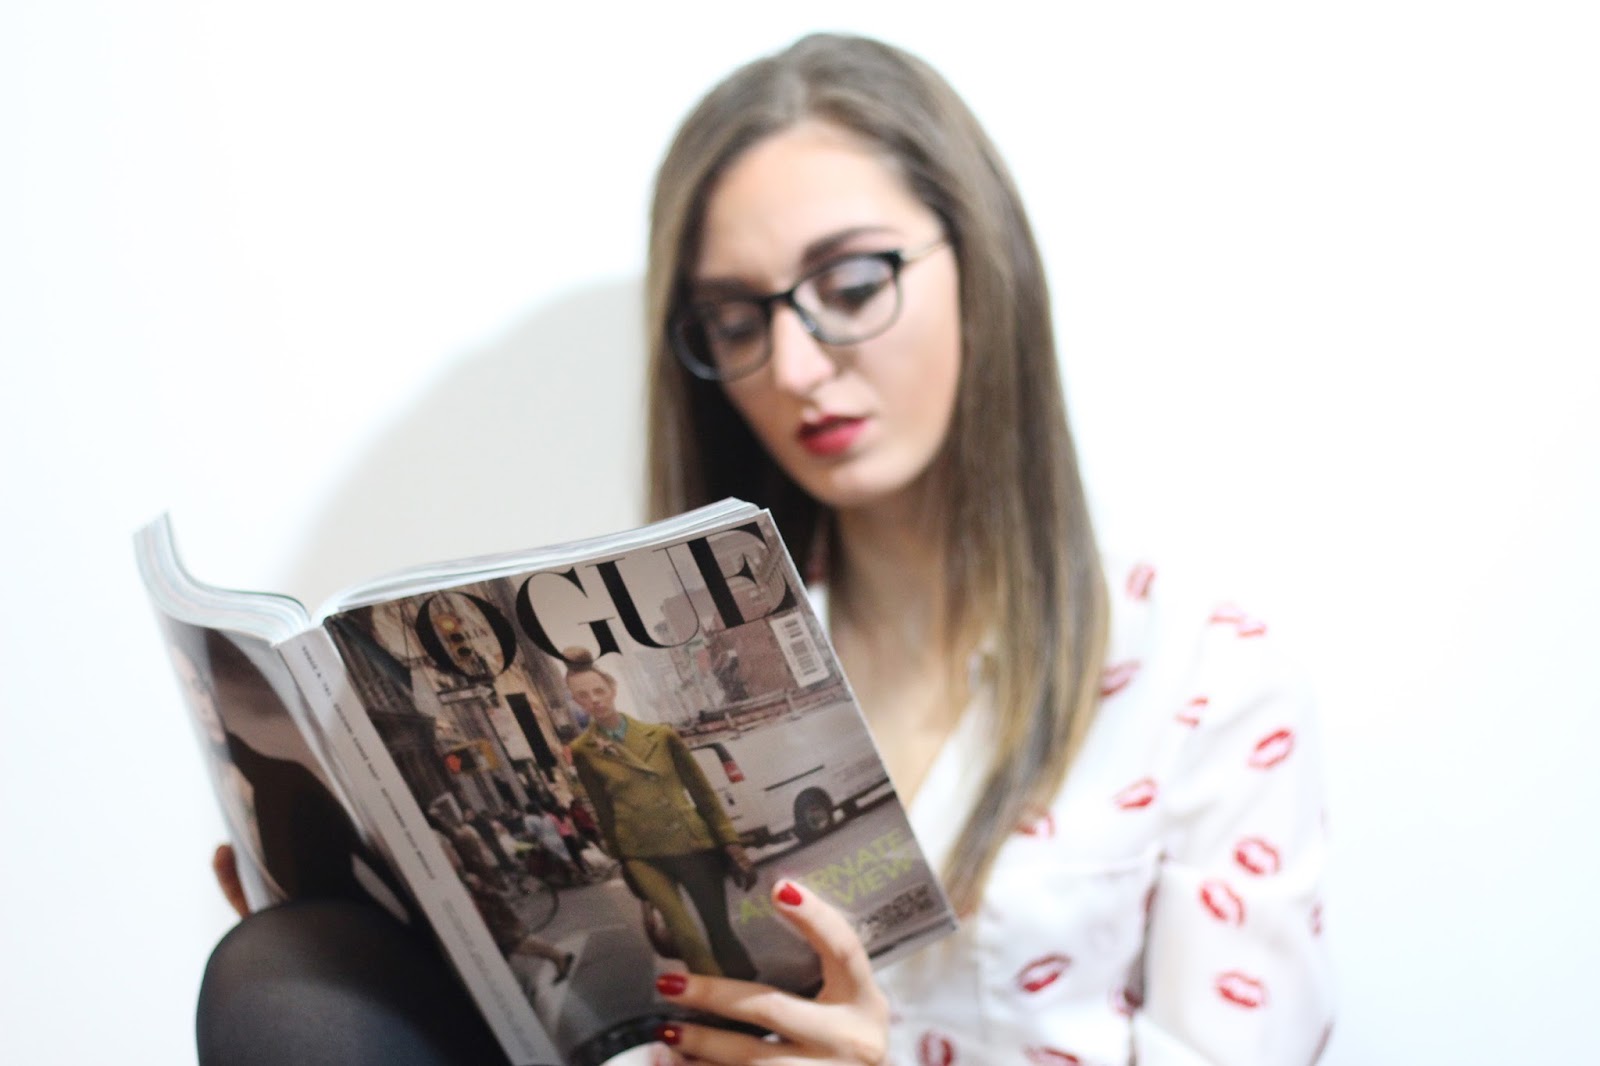 Occhiali Firmoo low cost glasses woman fashion blogger trend nerd girl vogue magazine